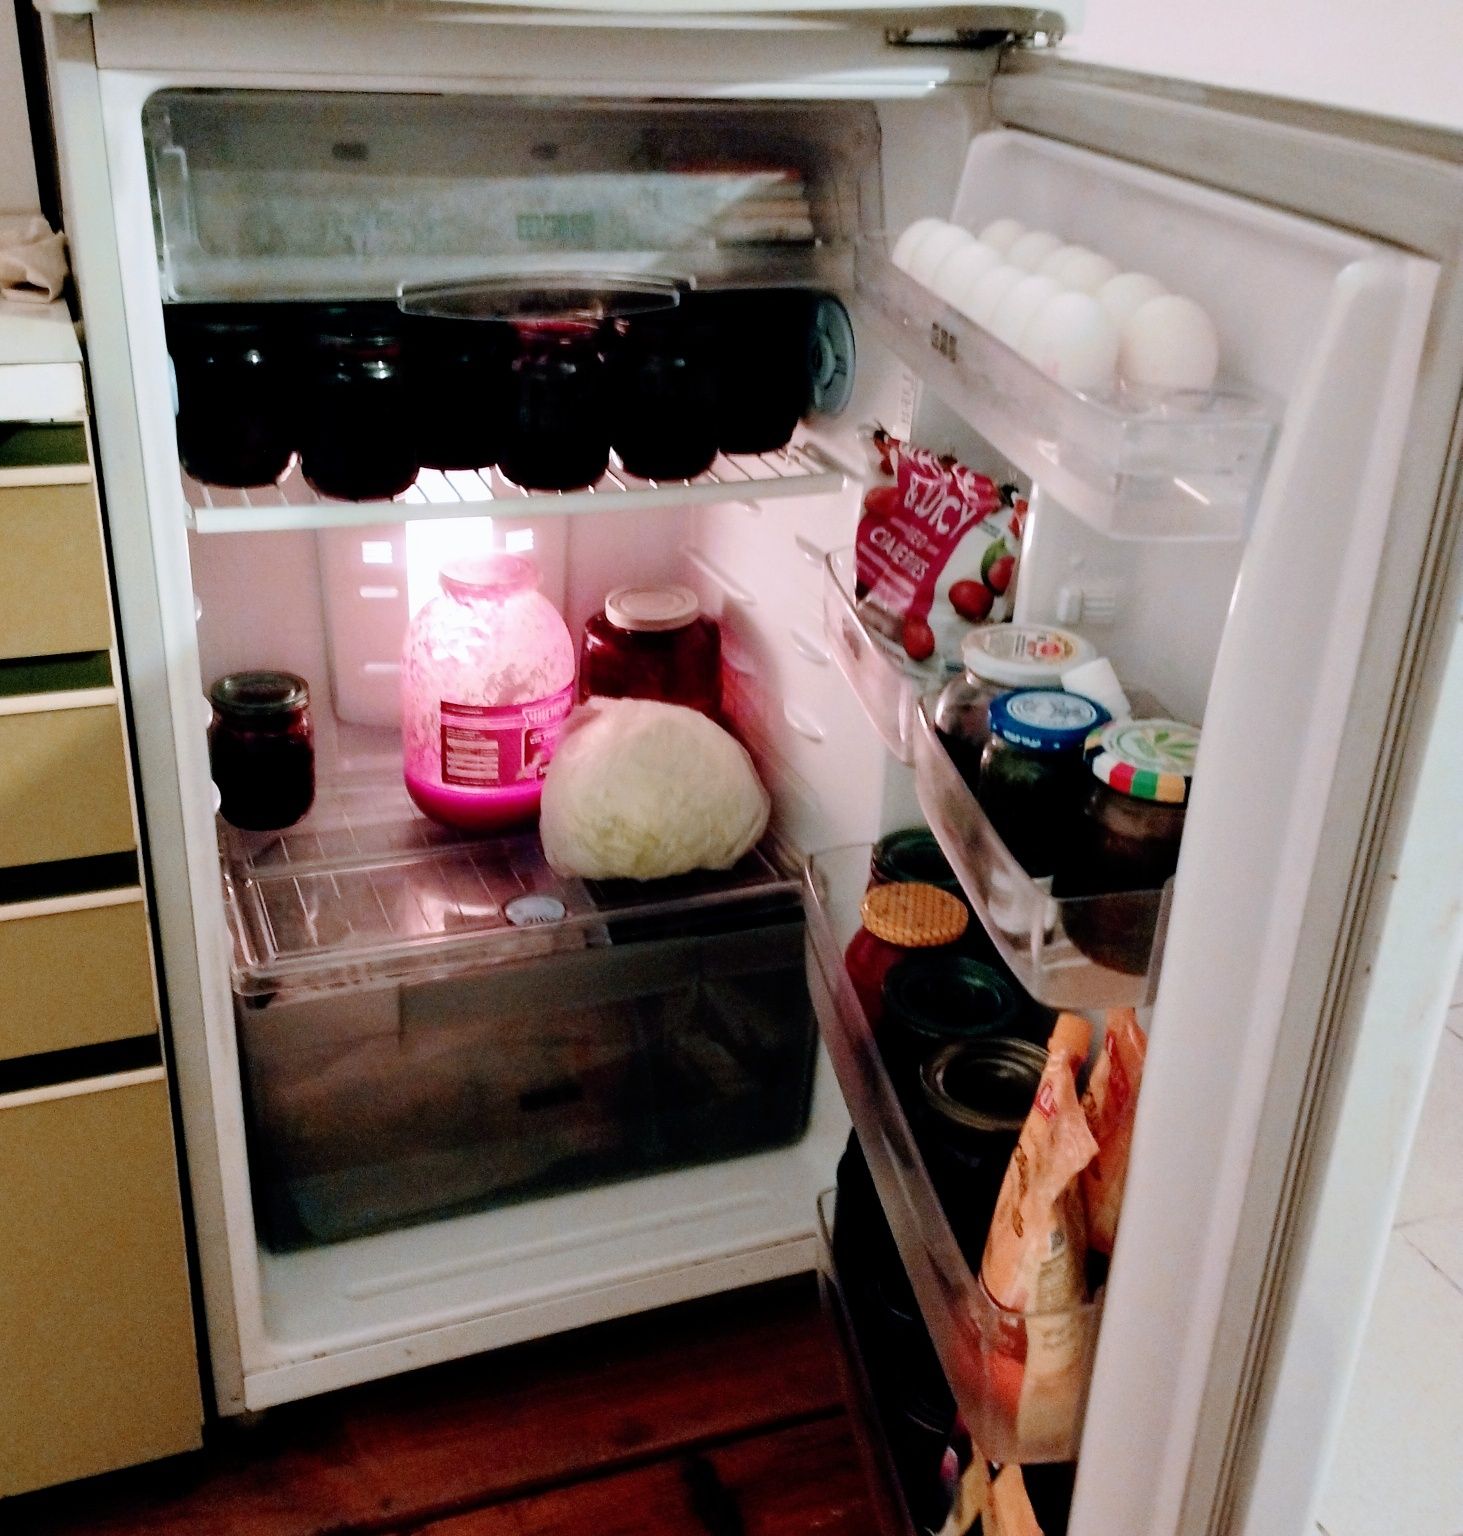 Холодильник Samsung ноуфрост,